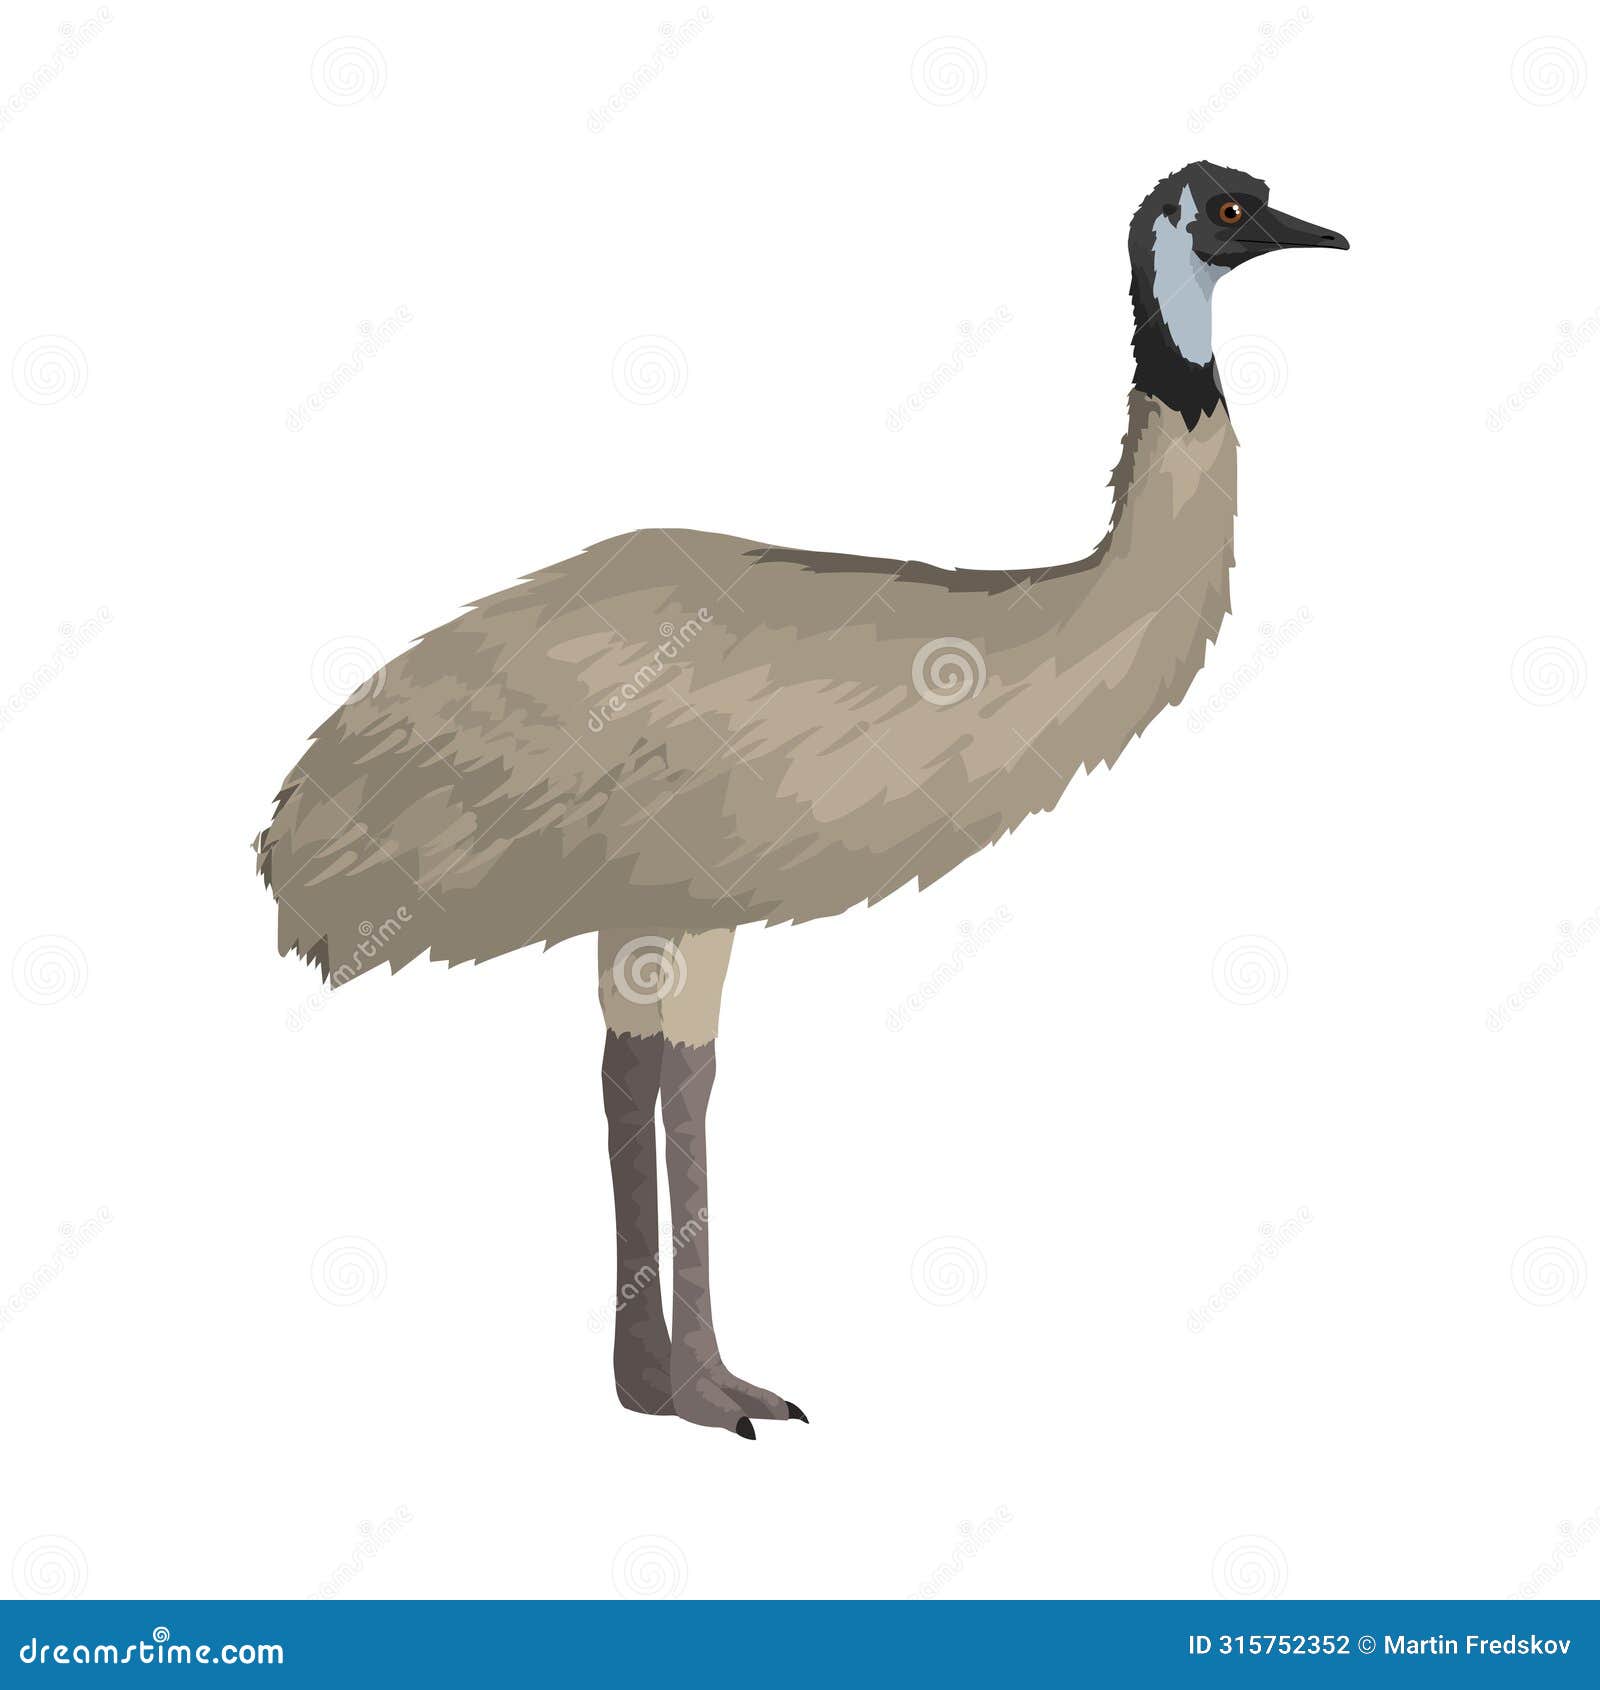 dromaius novaehollandiae - emu - lateral view